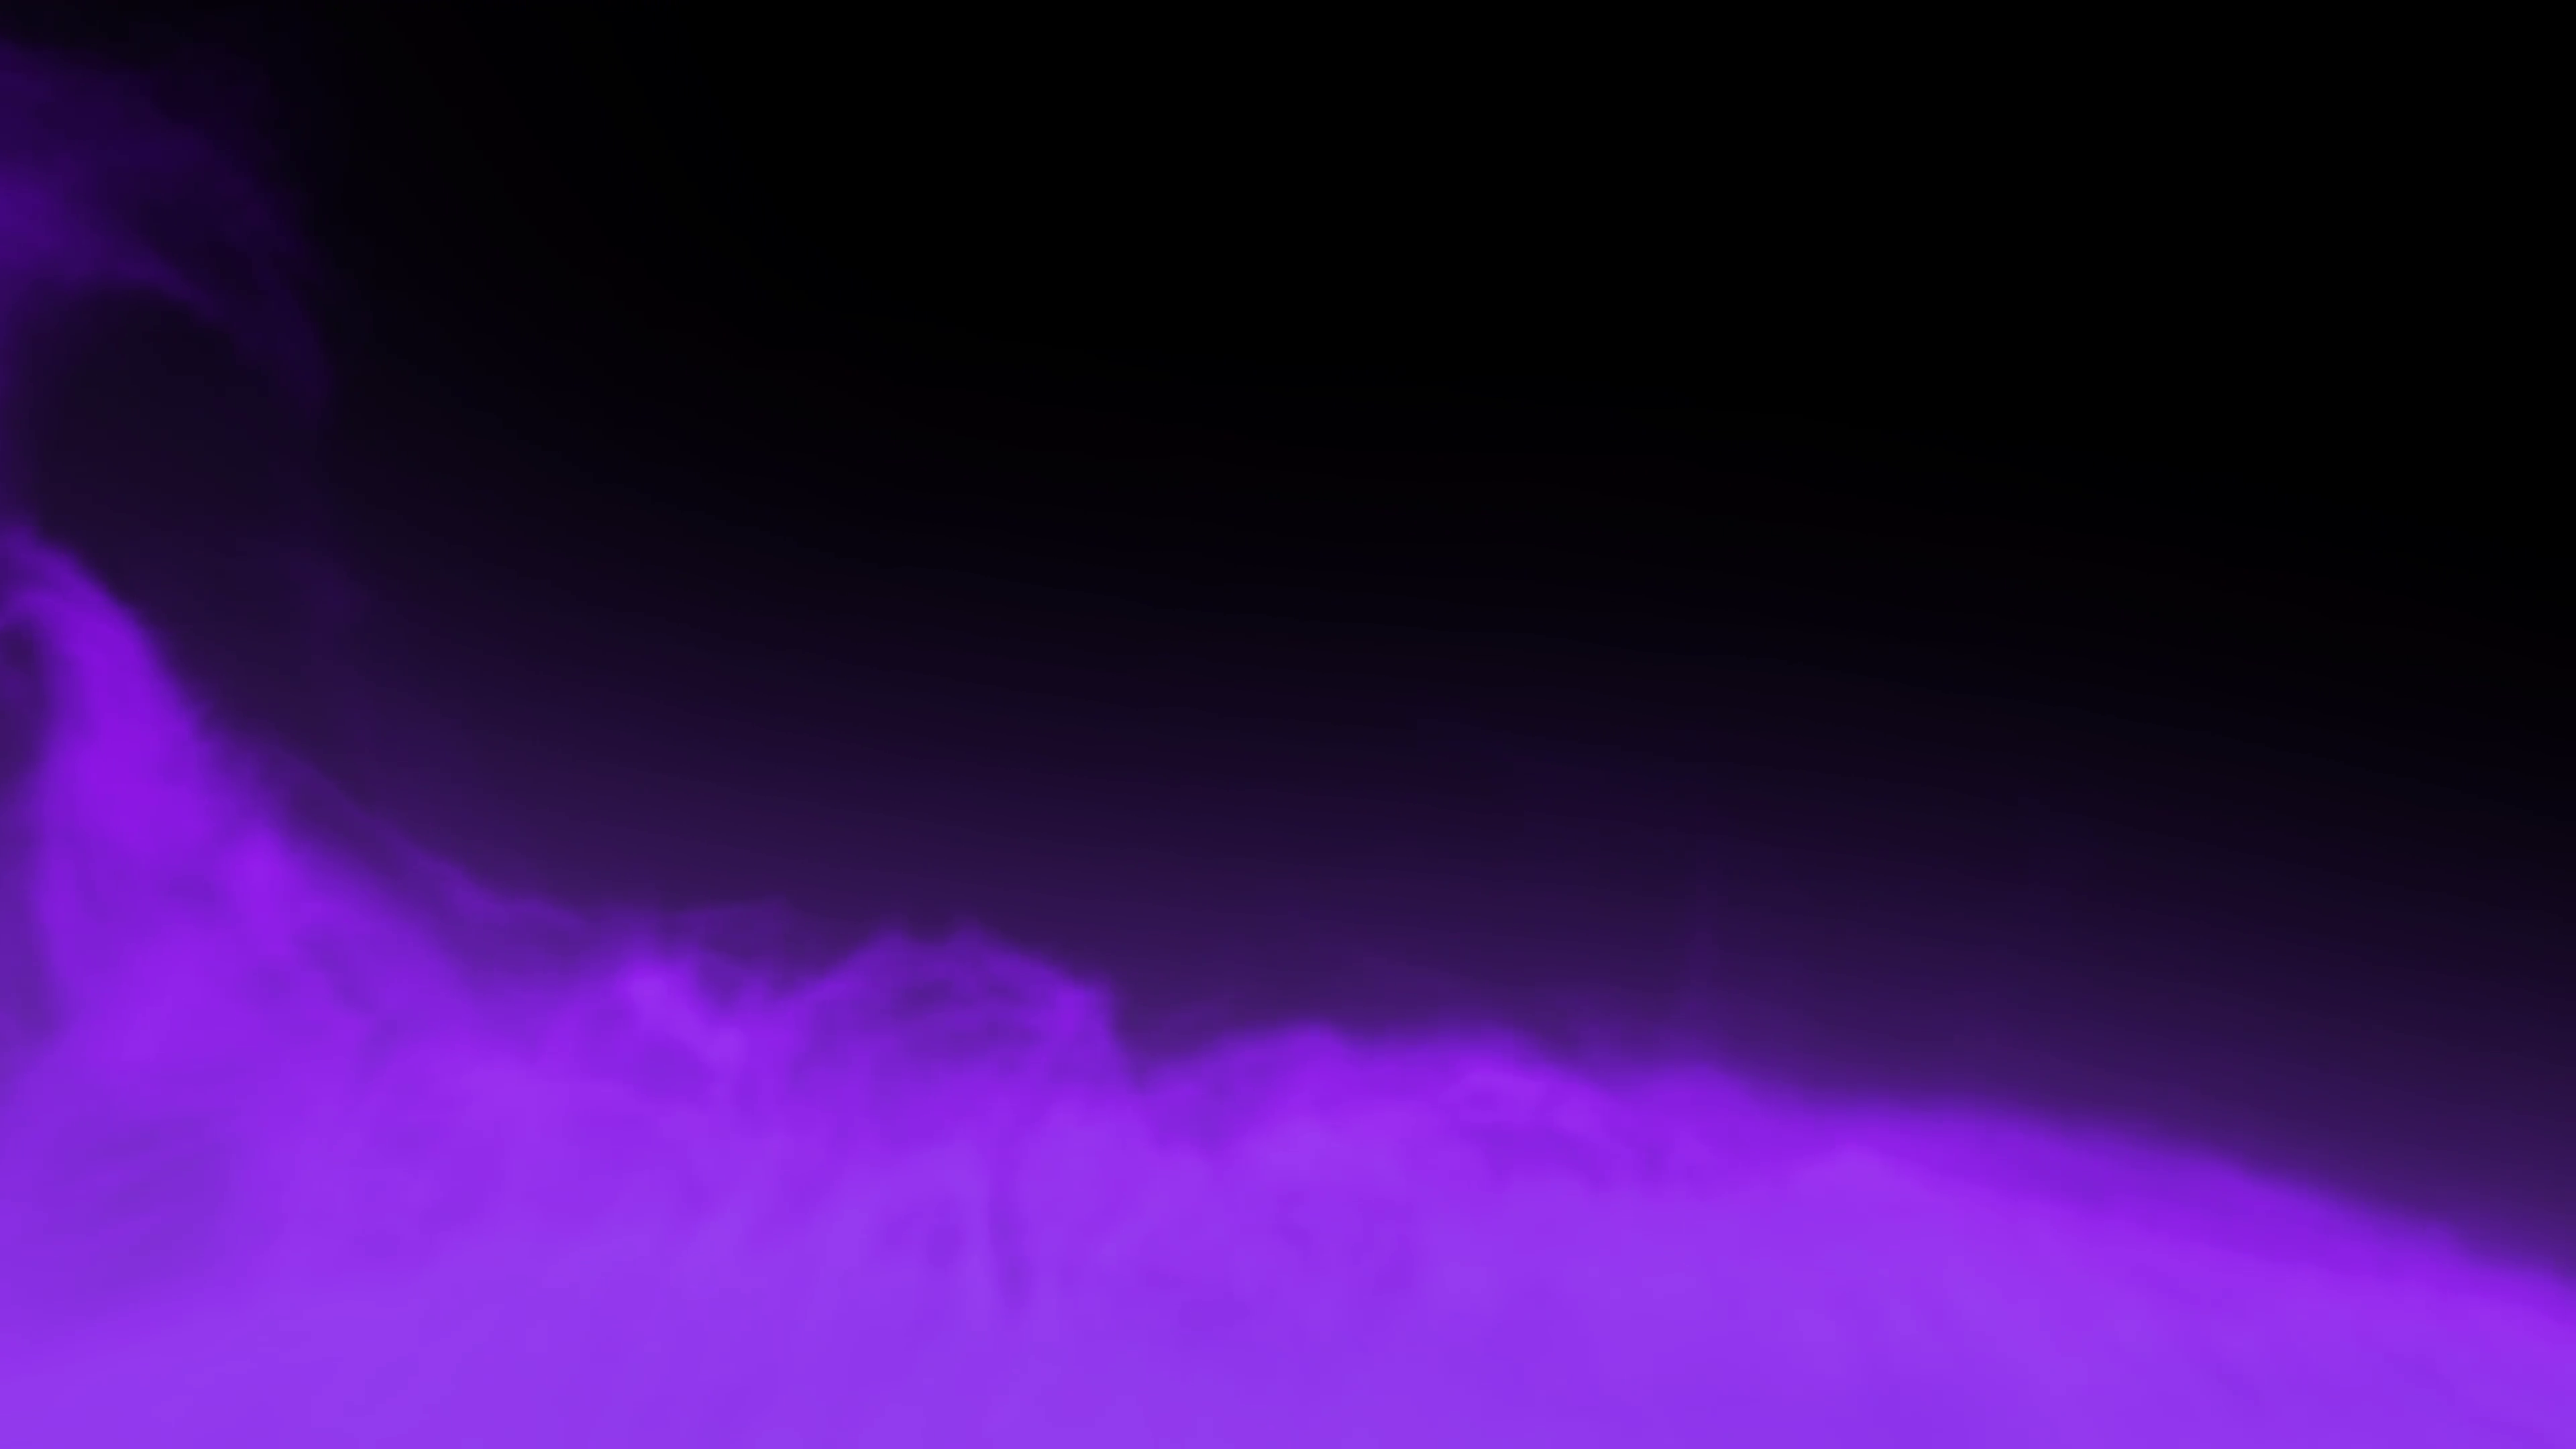 Animated dense purple smoke or gas slowly rising against transparent ...